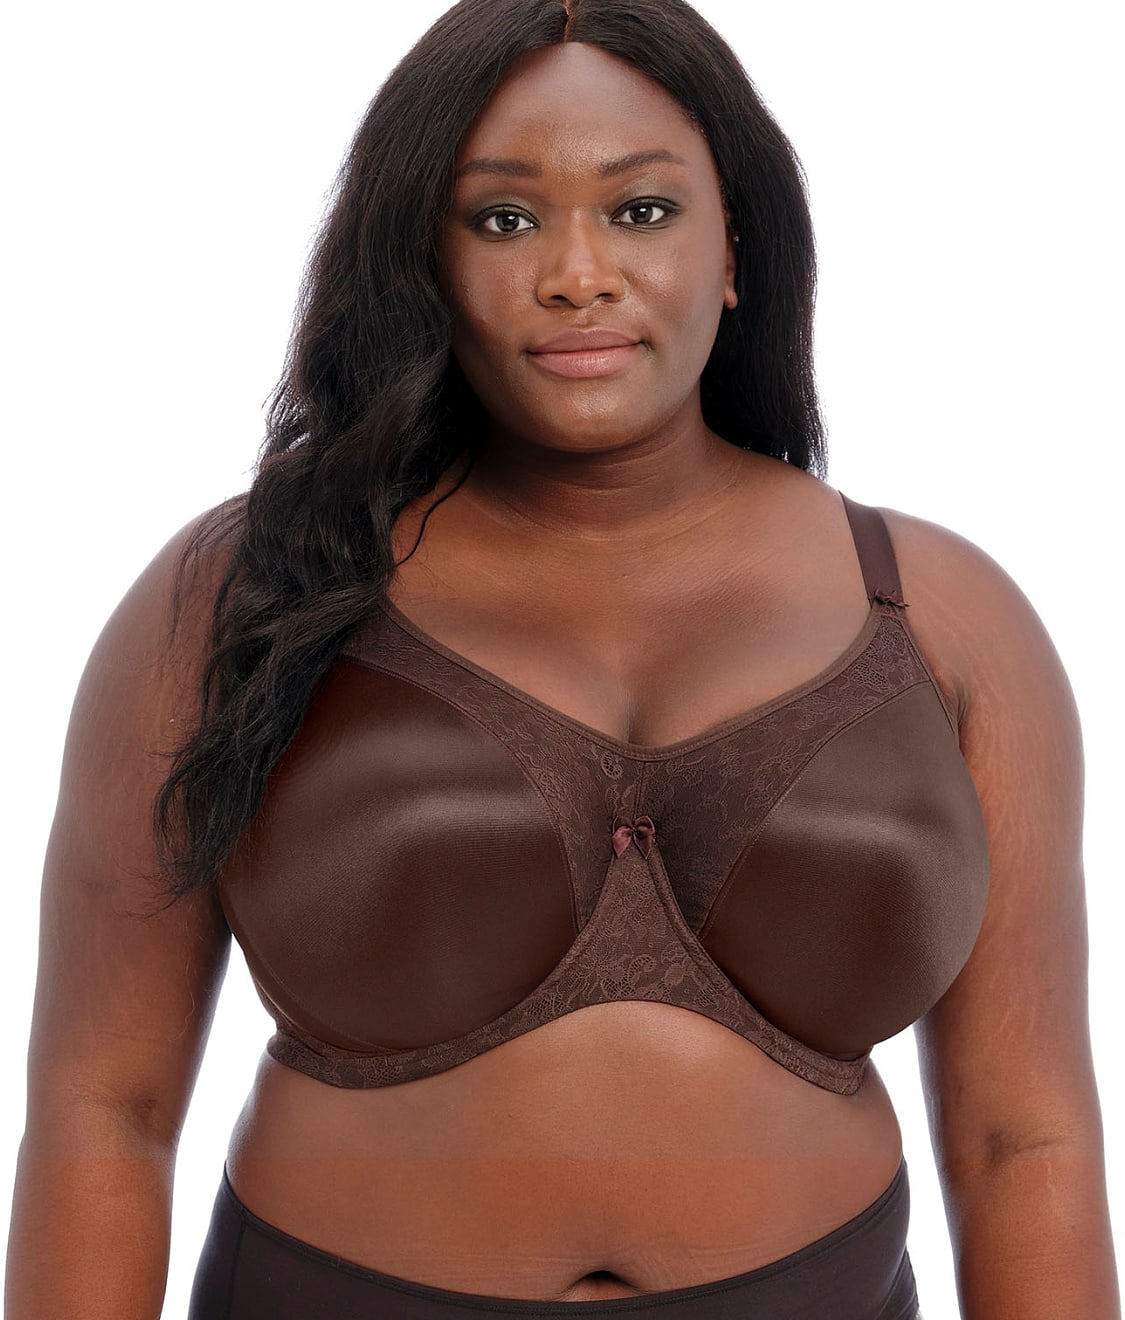 Cacique black bra size 40H  Black bra, Fashion, Bra sizes